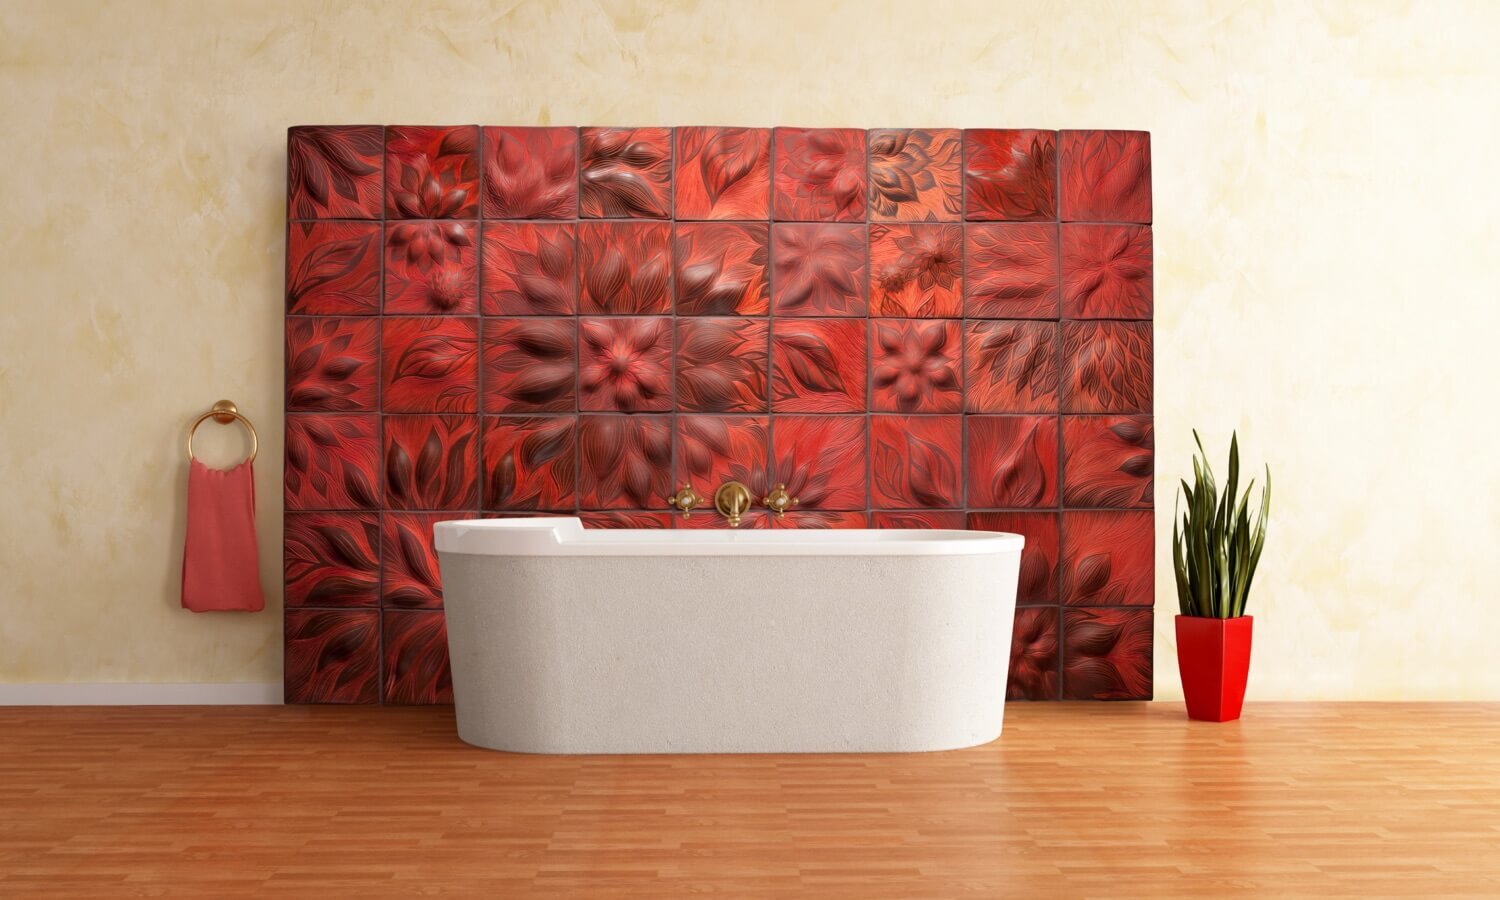 Art Waterhouse Circe Invidiosa Art Mural Ceramic Backsplash Bath Decor Tile #82 